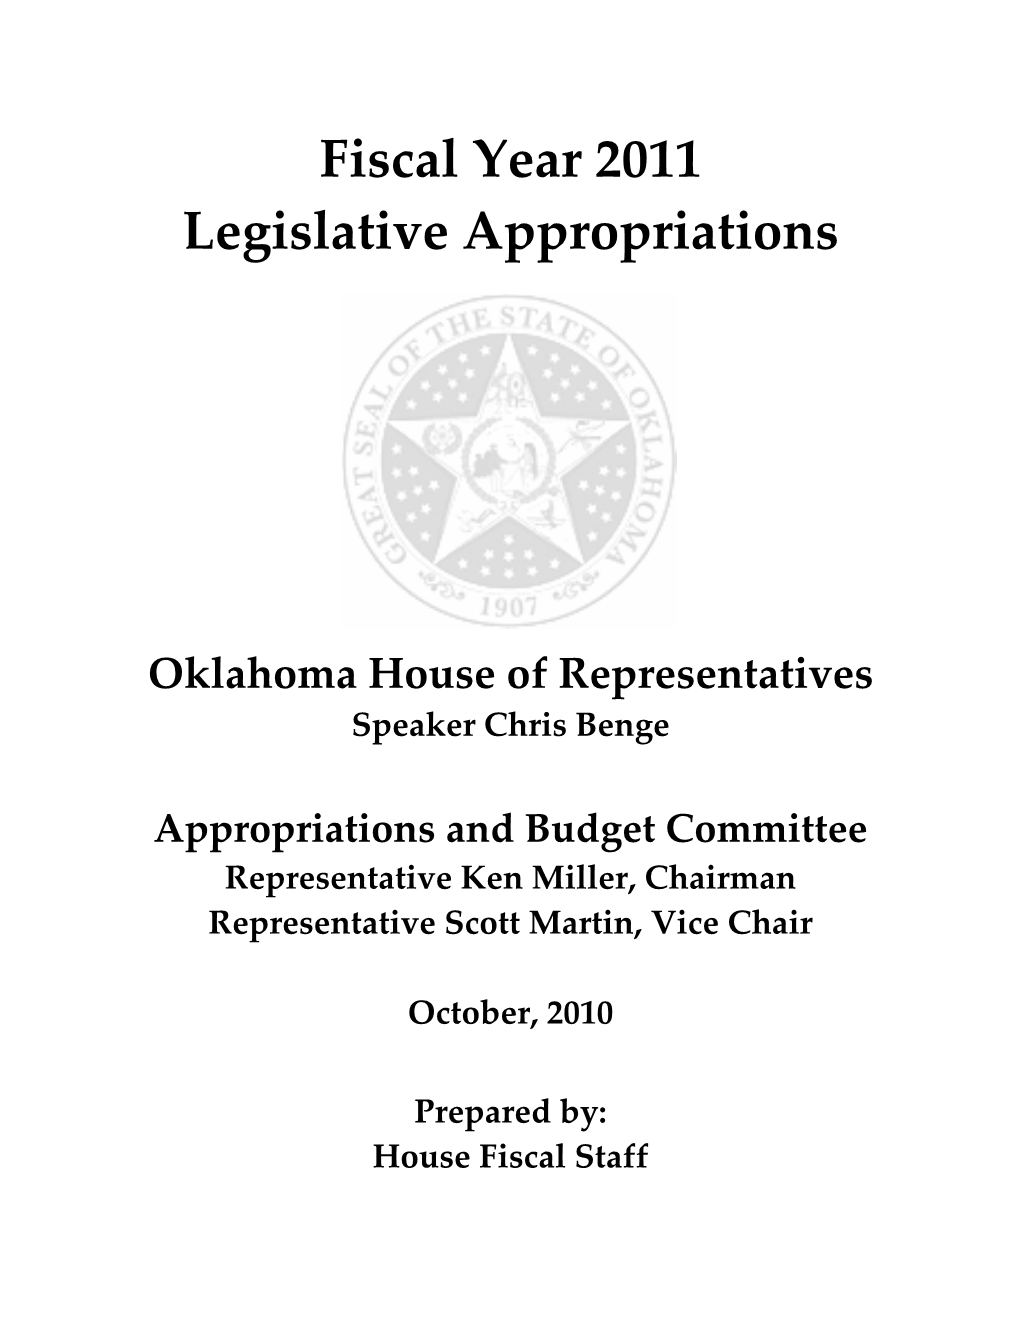 Fiscal Year 2011 Legislative Appropriations